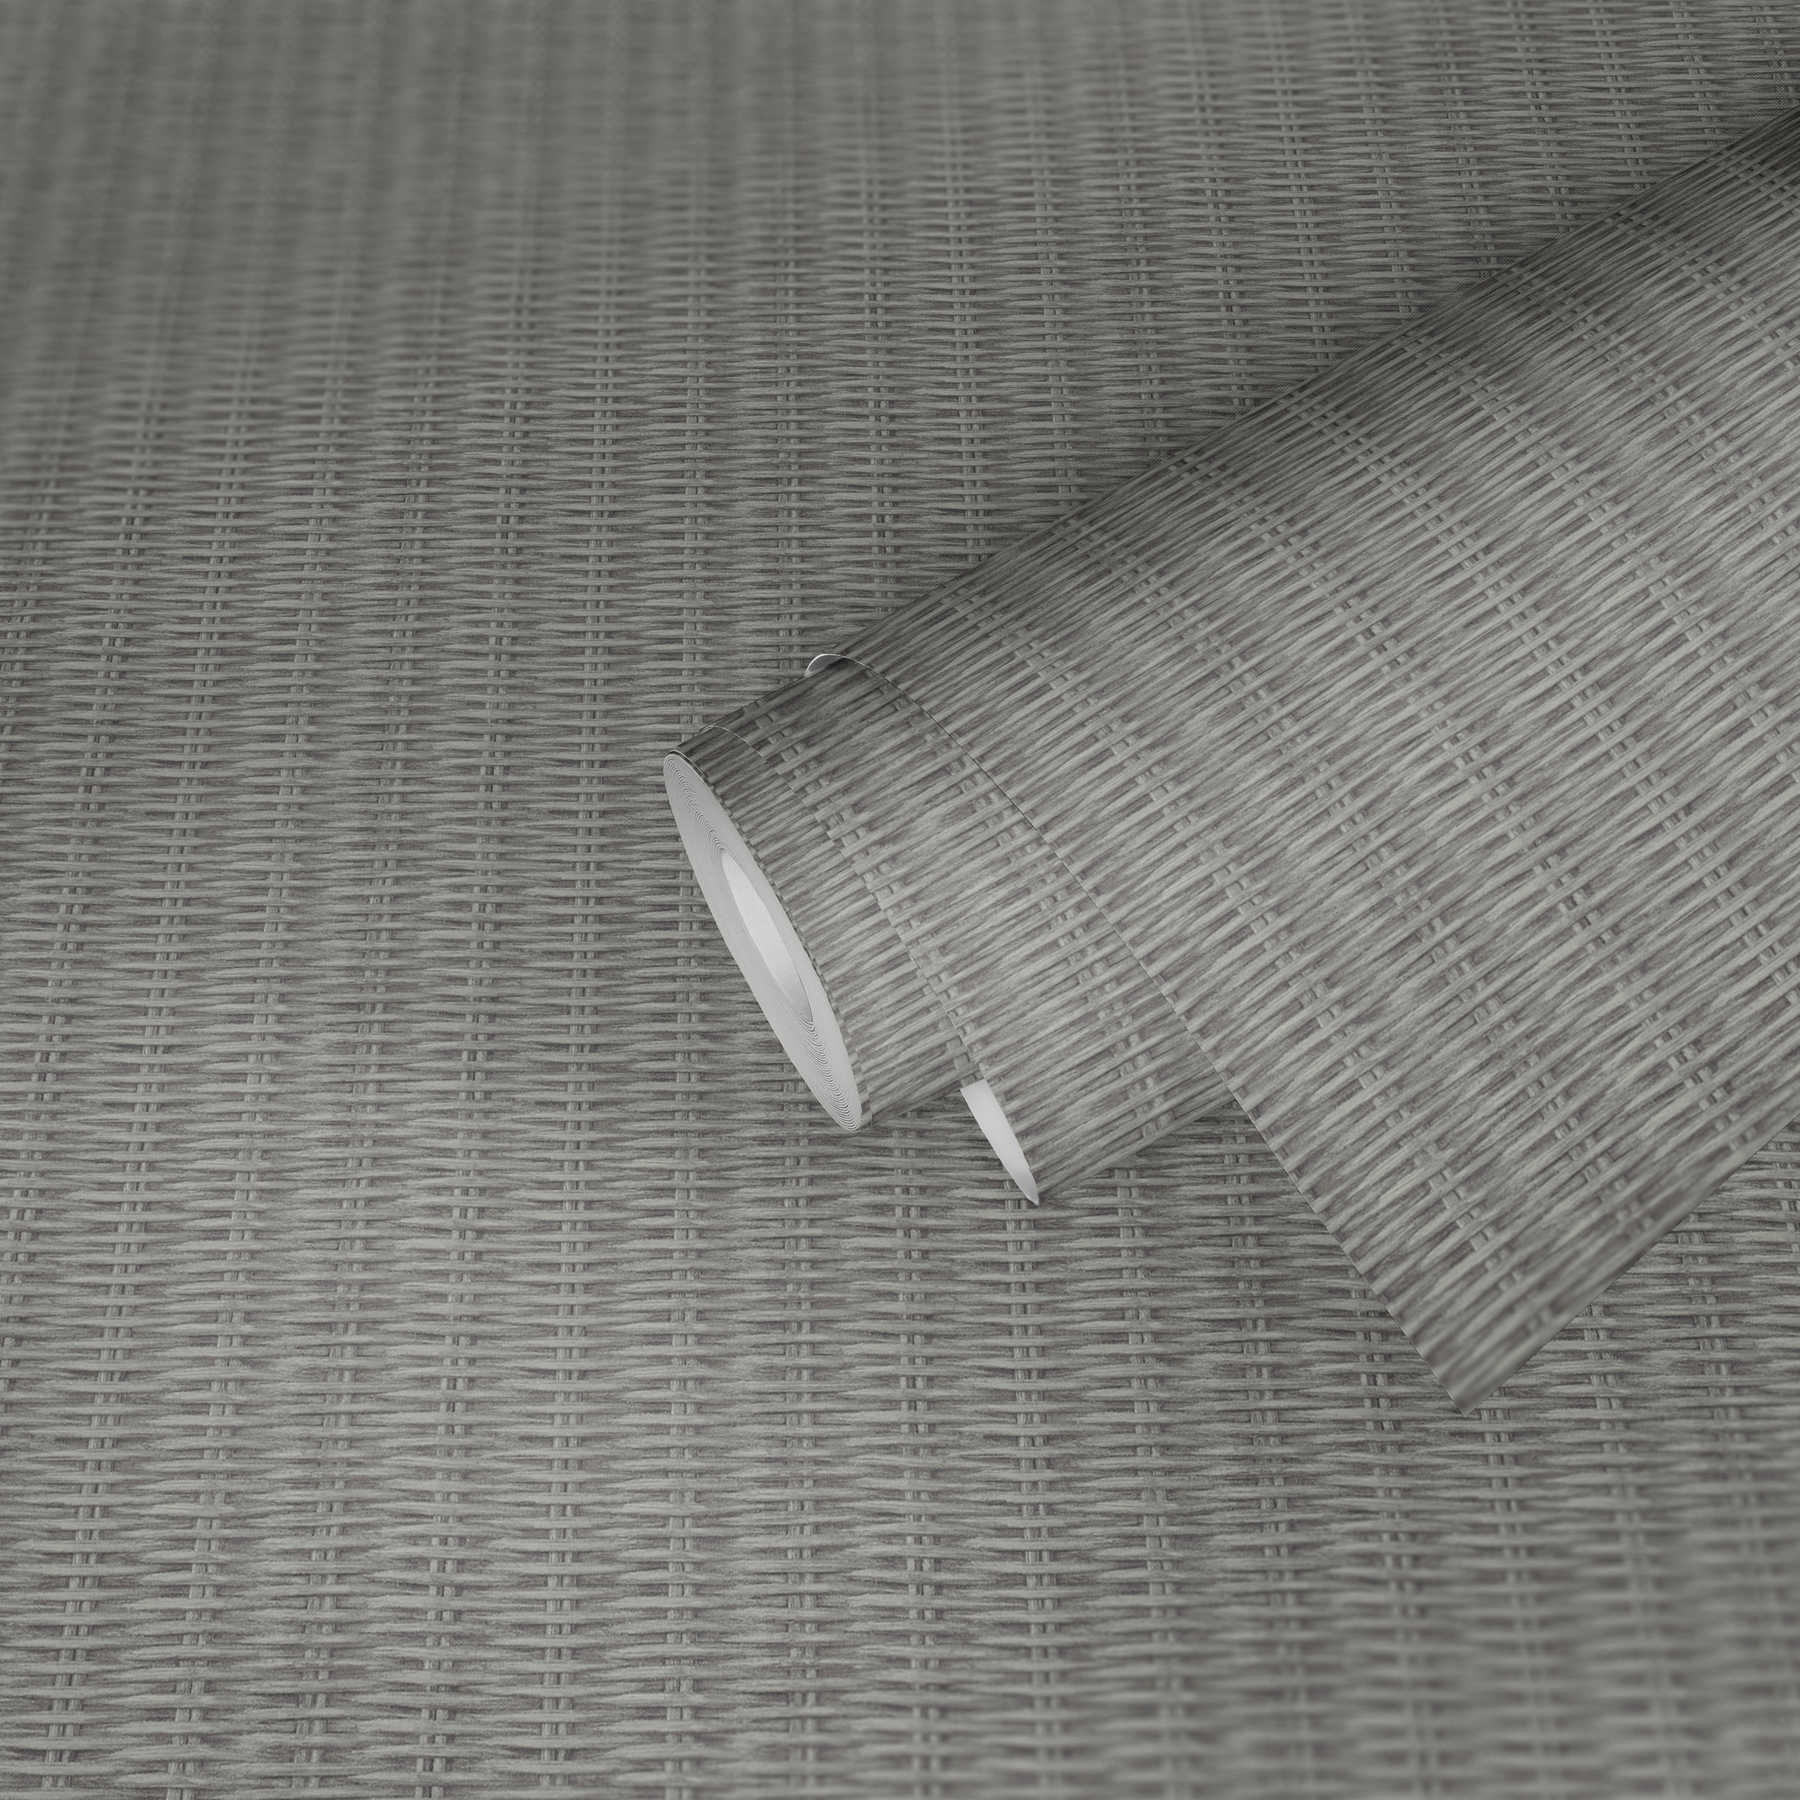             Papel pintado de tejido no tejido, aspecto natural - gris
        